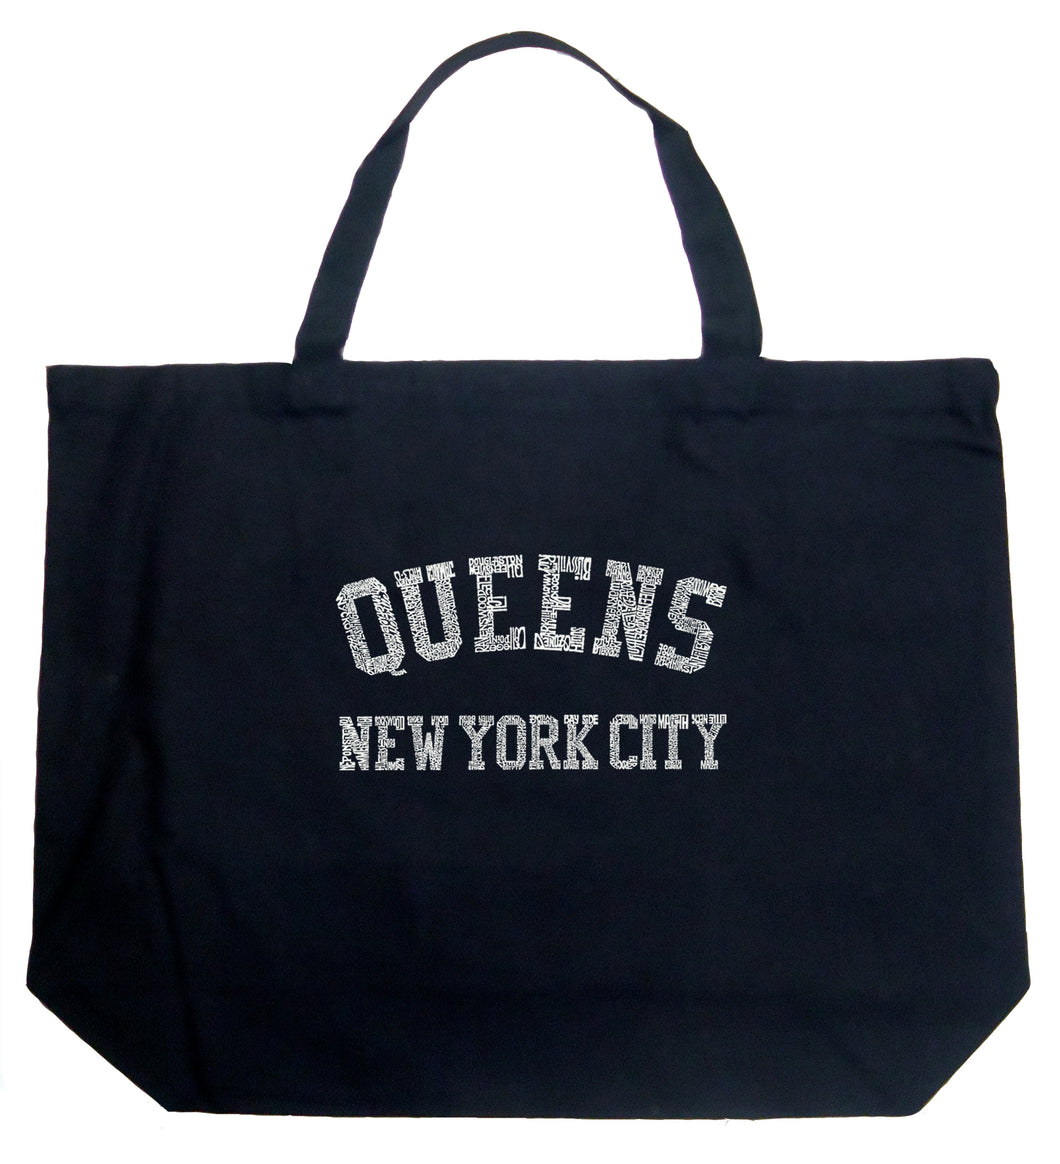 POPULAR NEIGHBORHOODS IN QUEENS, NY - Large Word Art Tote Bag